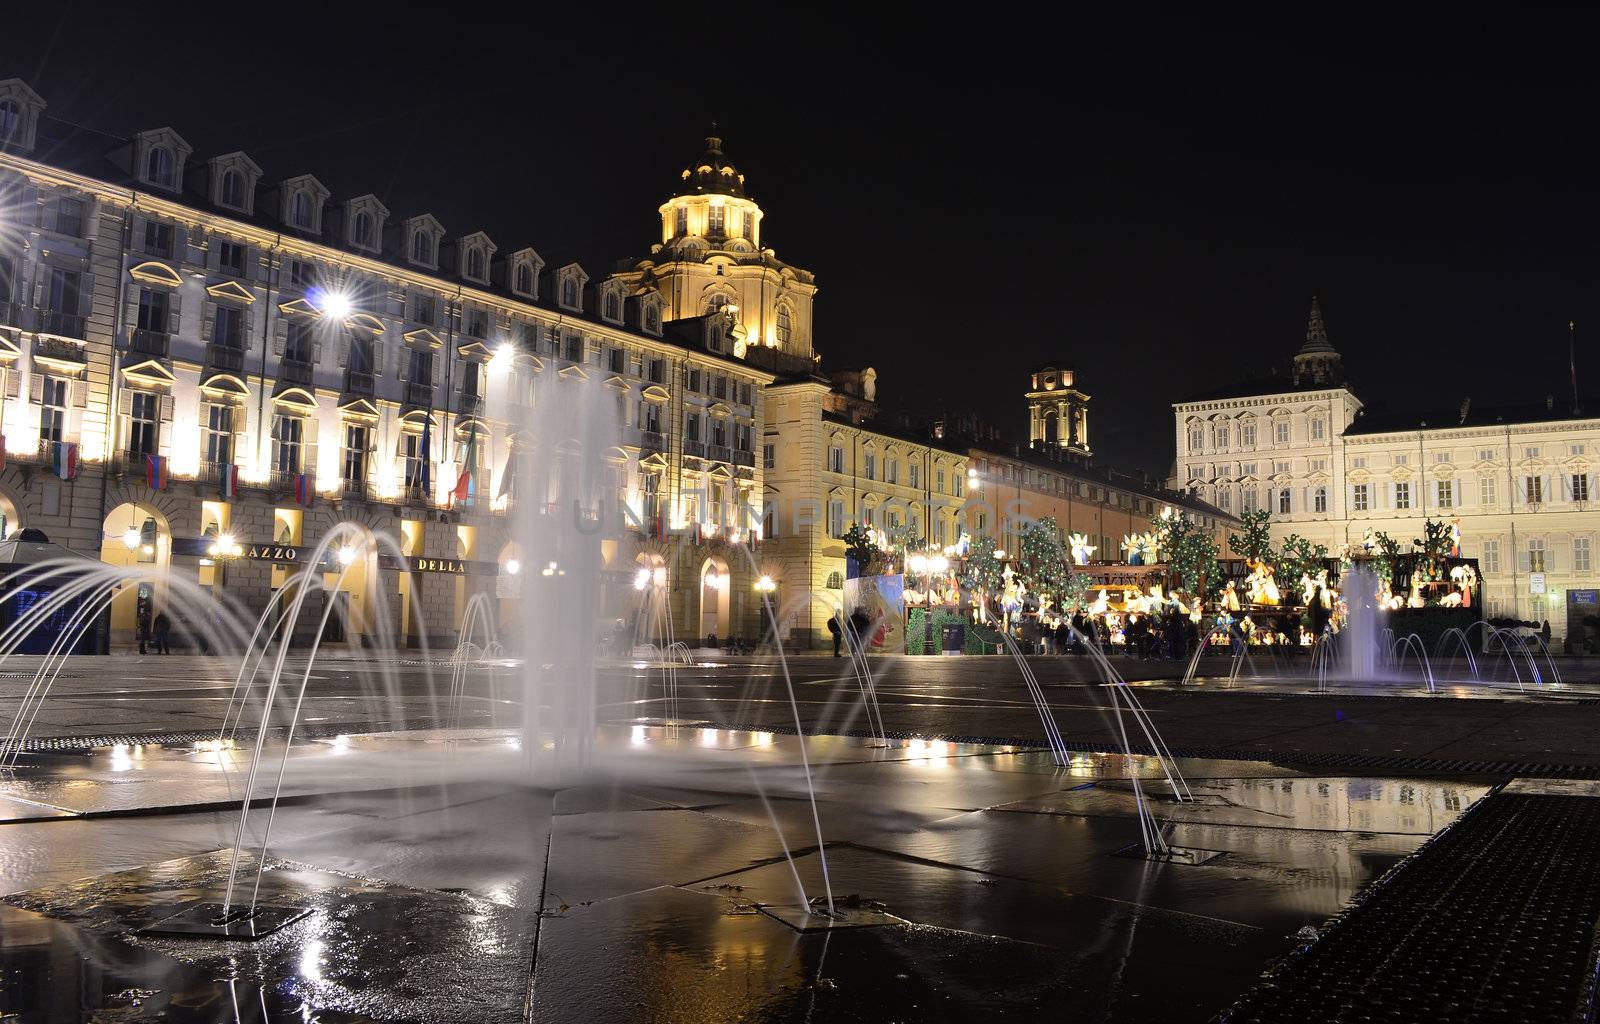 Piazza Castello in Turin at night by artofphoto